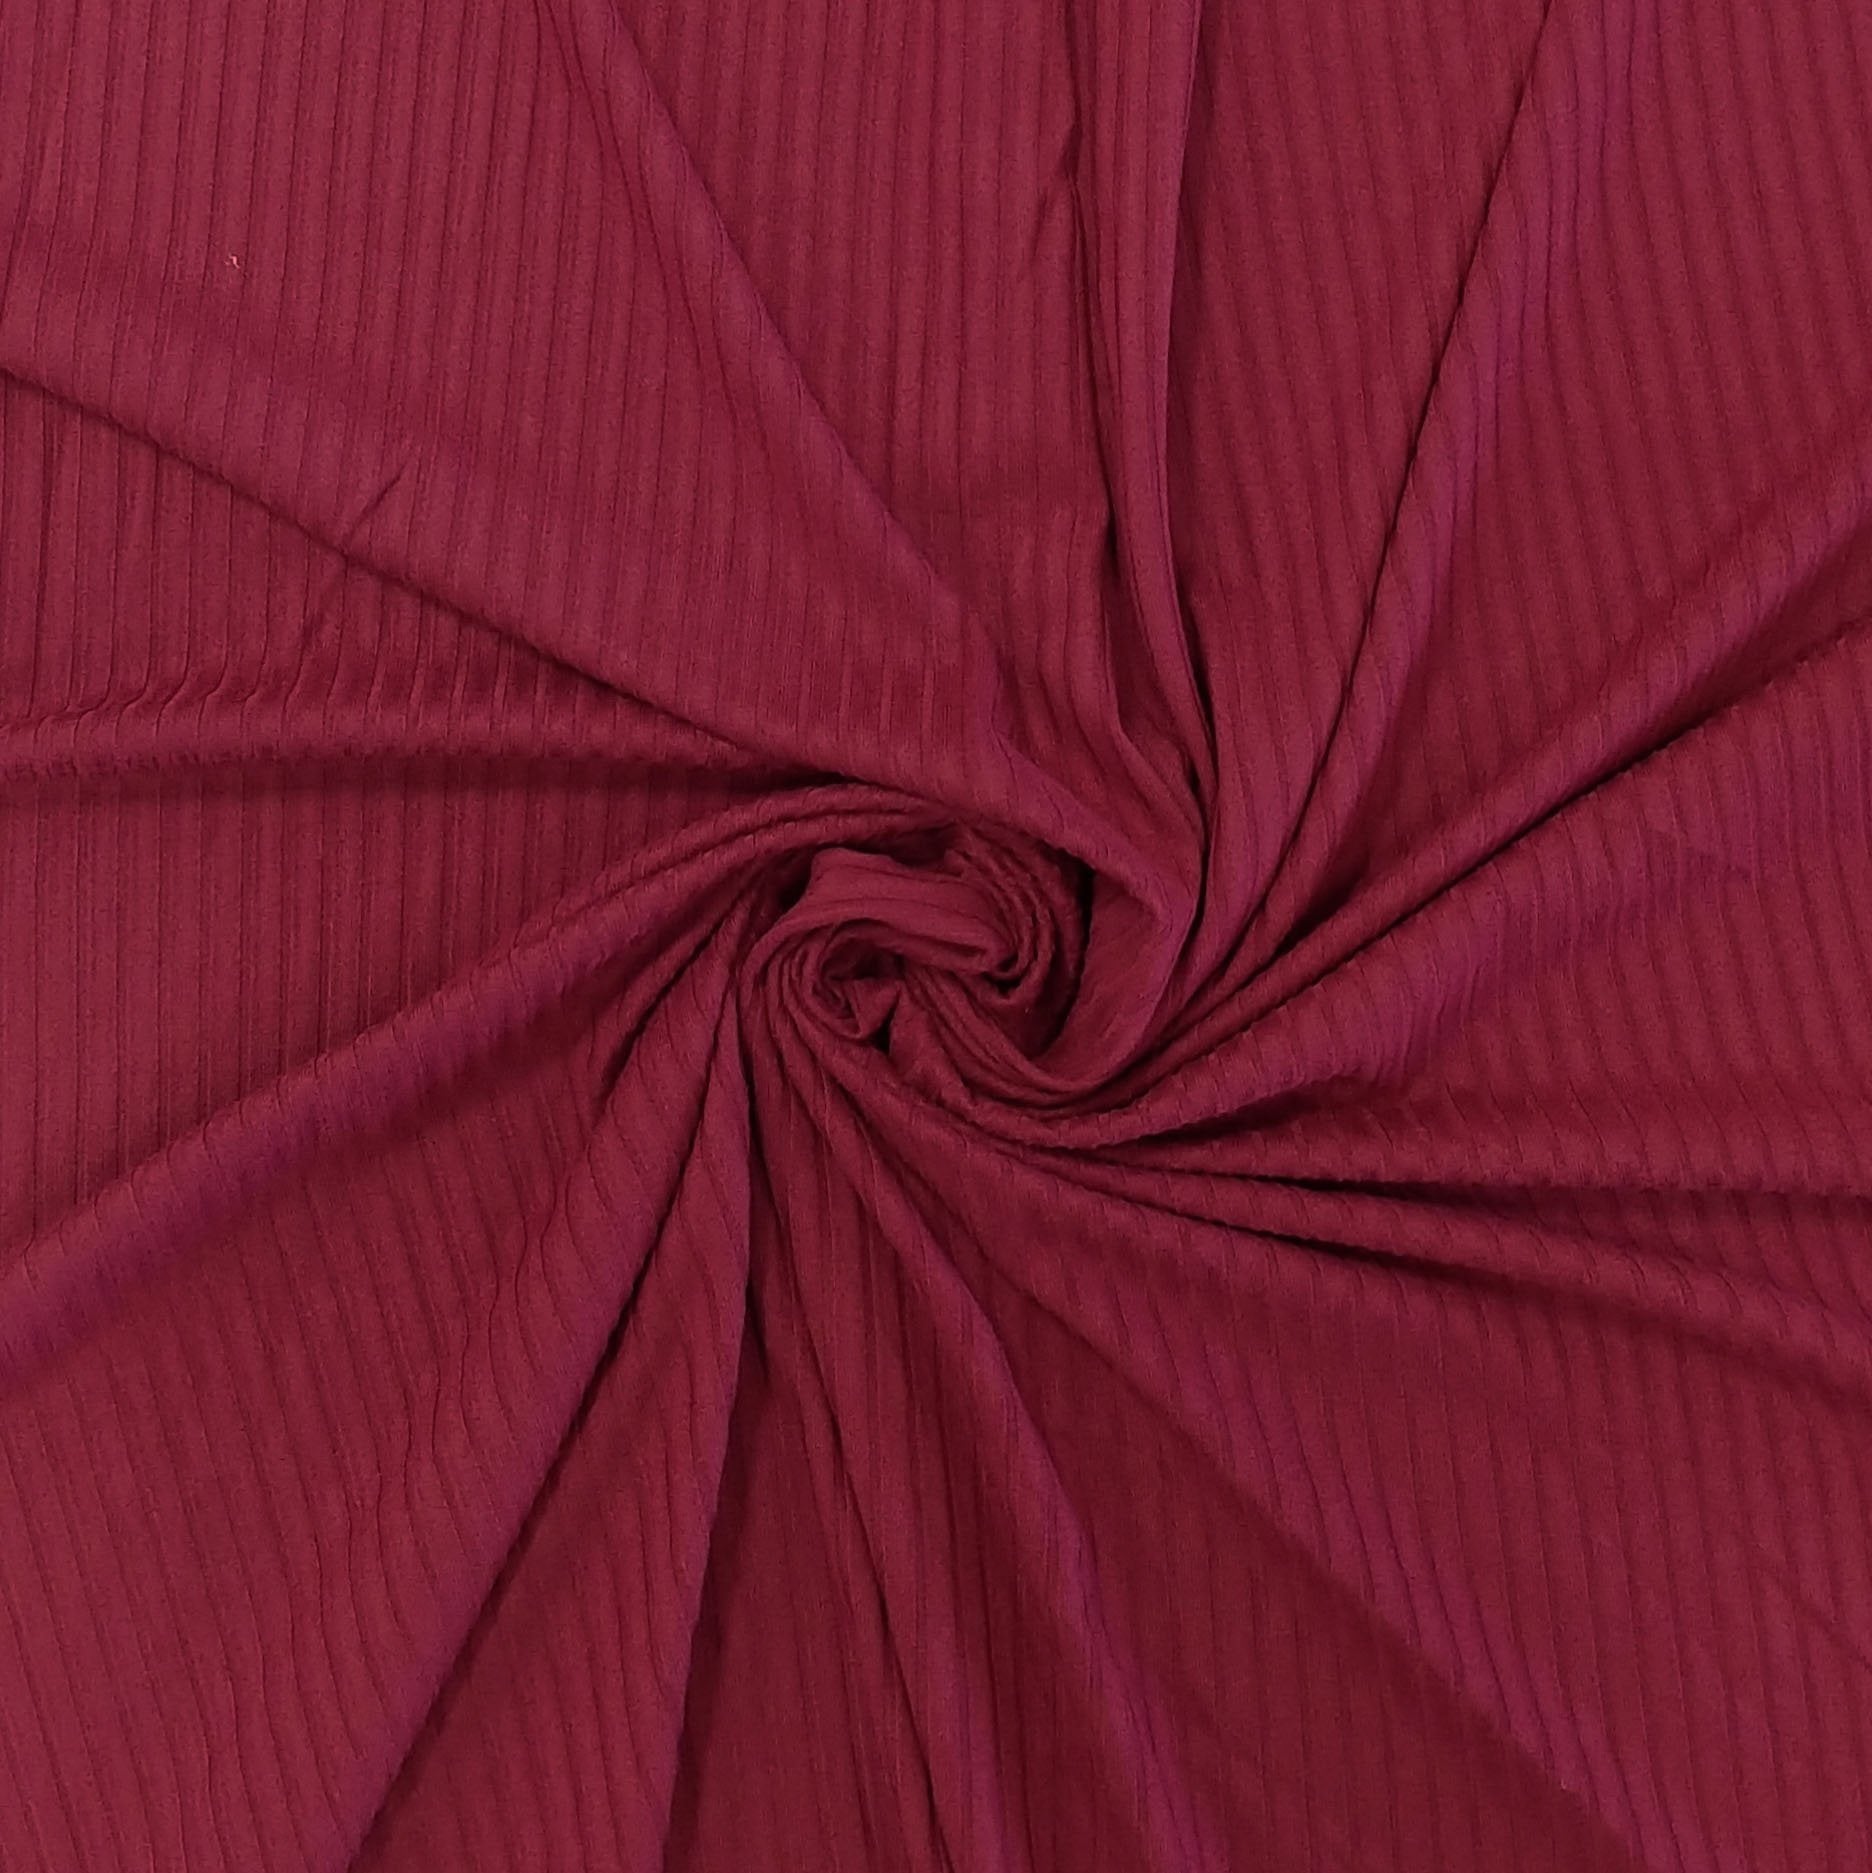 Solid Burgundy 4 Way Stretch Moisture Wicking Athletic Performance Knit Fabric  Fabric, Raspberry Creek Fabrics